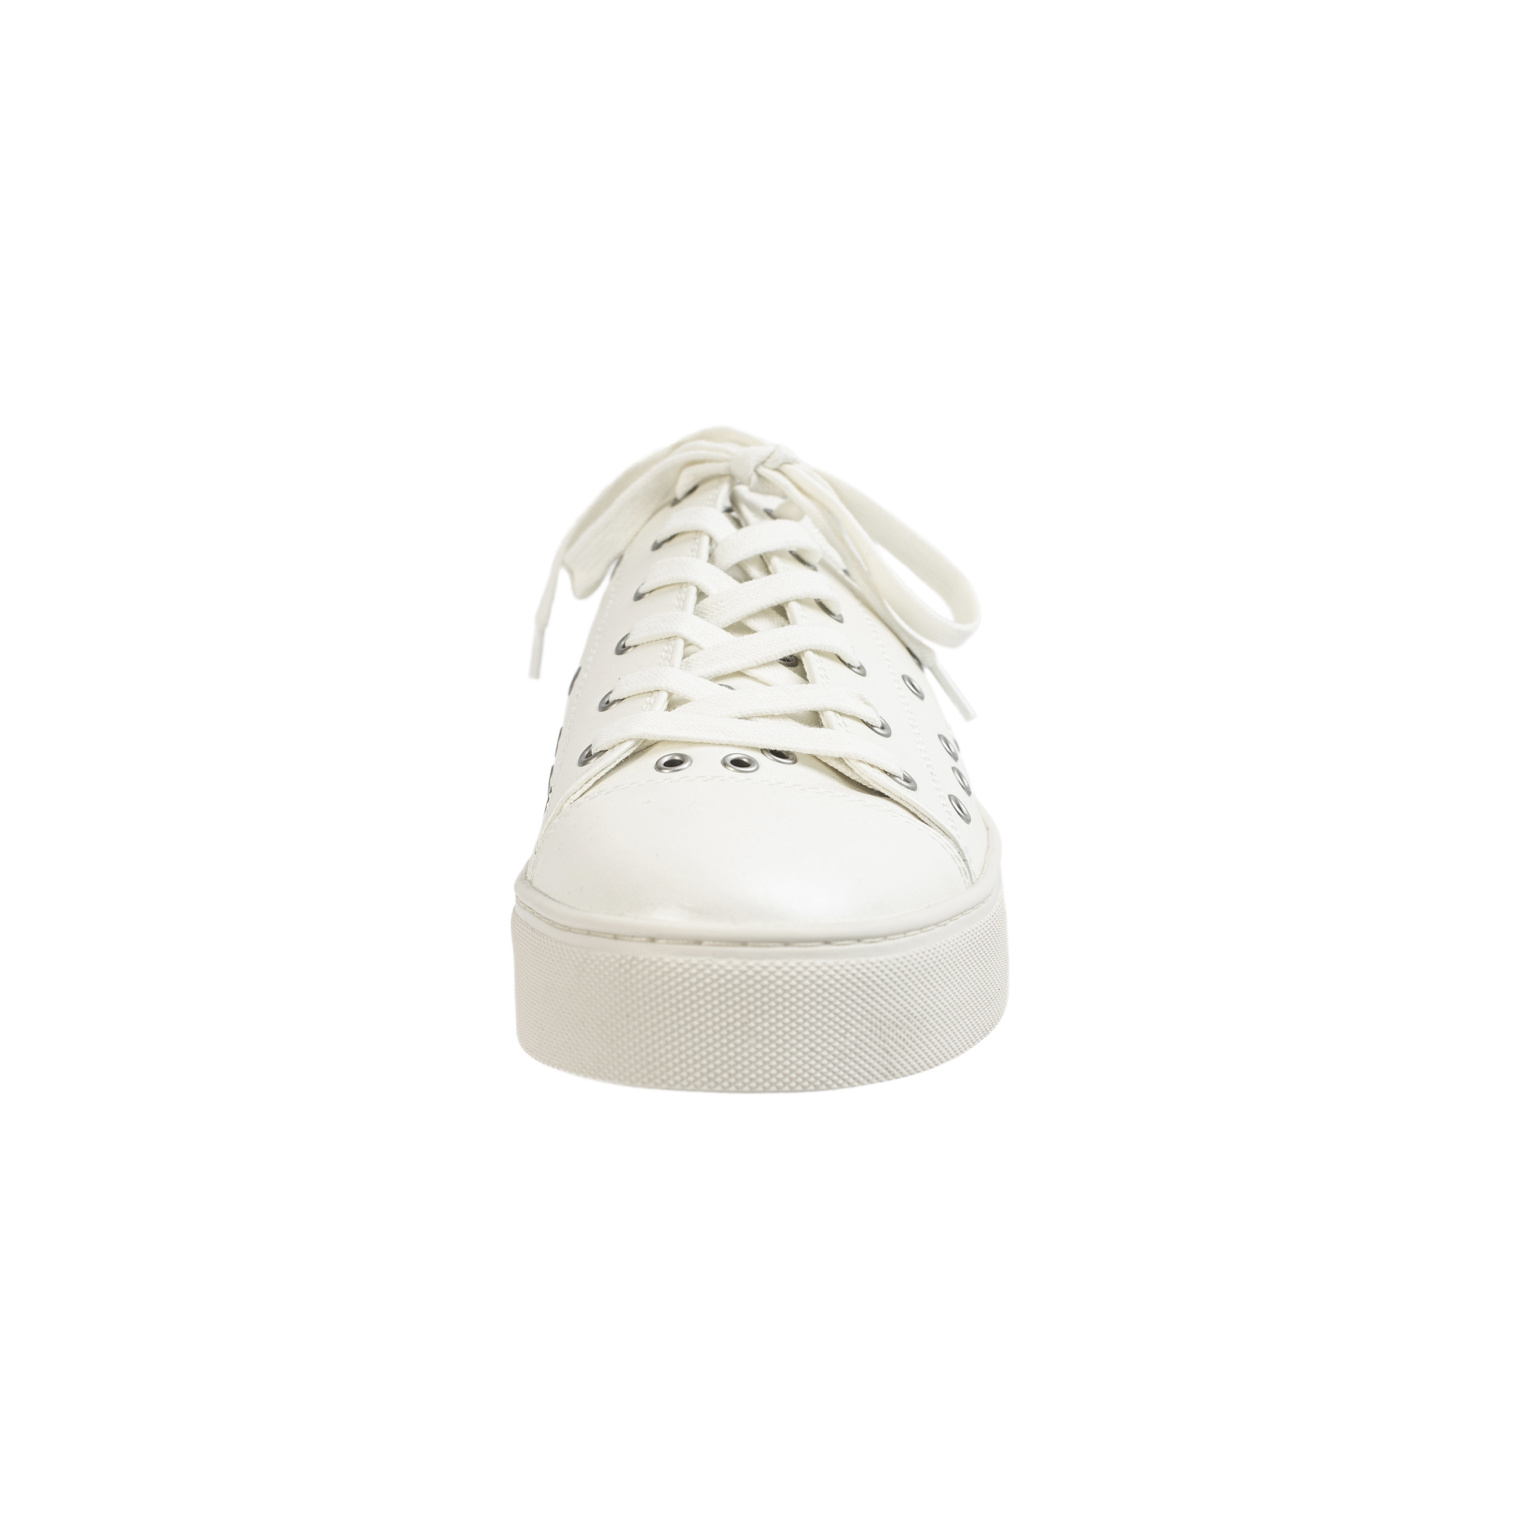 Yohji Yamamoto Eyelets Sneakers in white